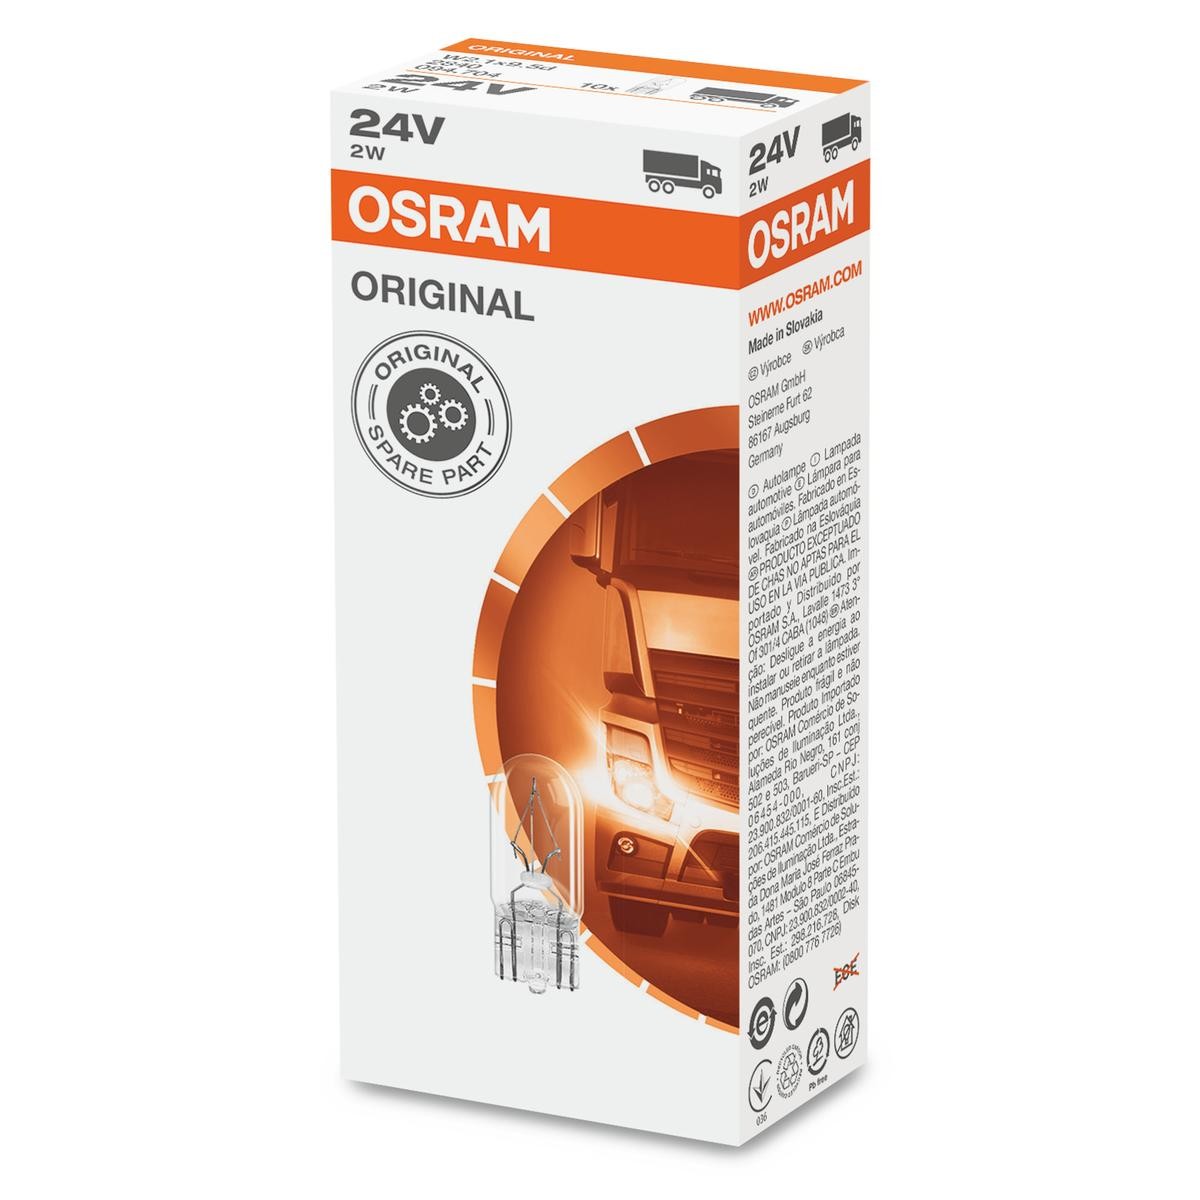 OSRAM ORIGINAL LINE Sockelglühlampe, 24V, 2W Glühlampe, Innenraumleuchte 2840 kaufen